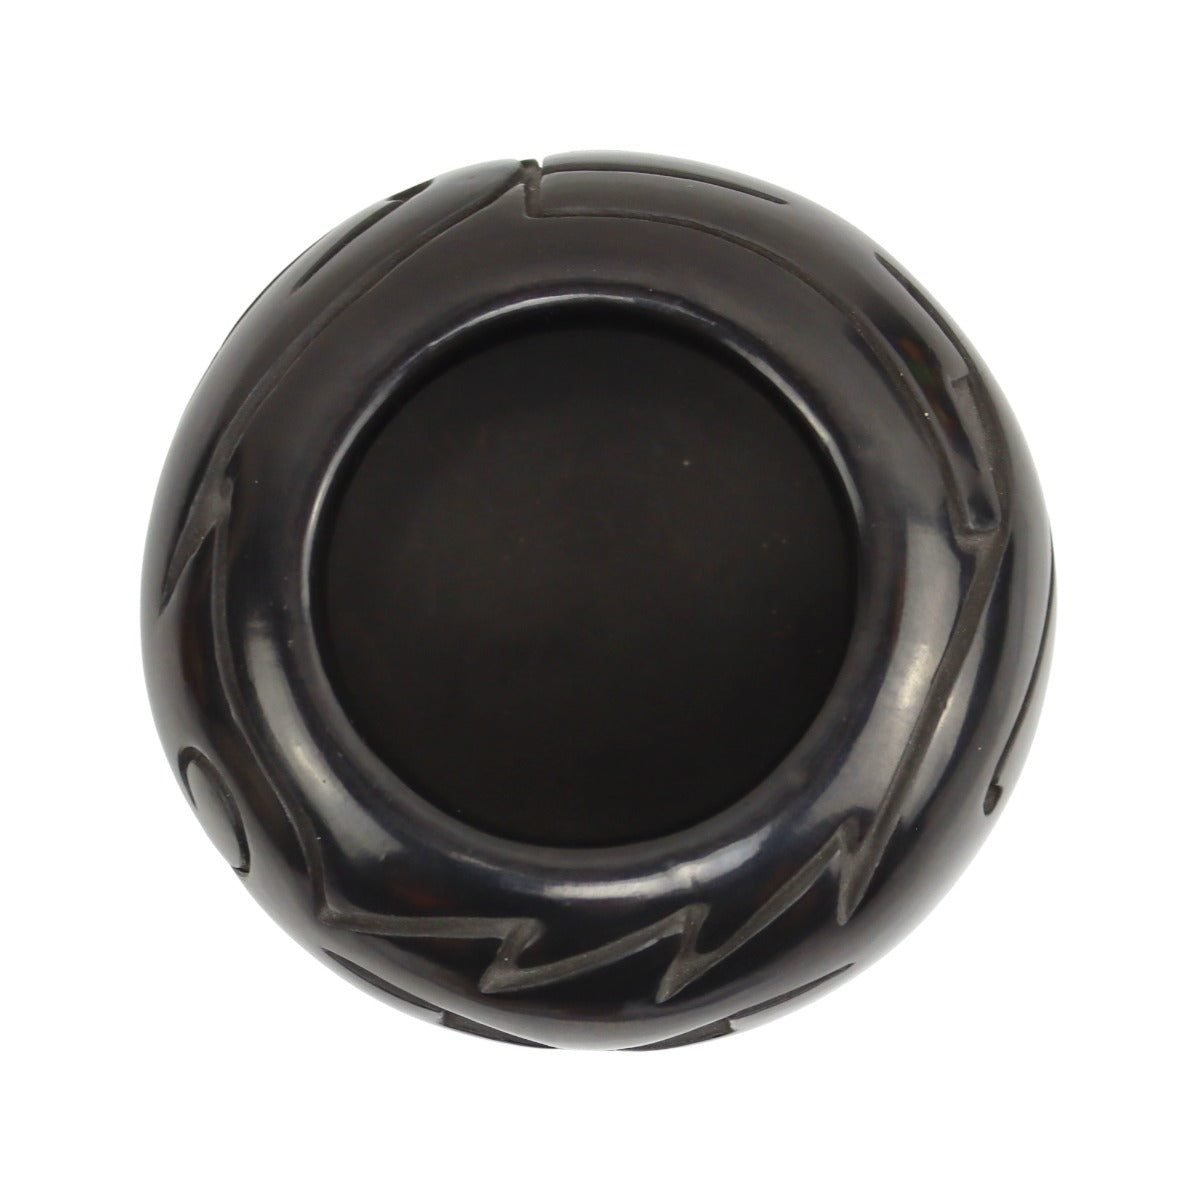 Toni Roller (b. 1935) - Santa Clara Black Jar with Carved Design c. 1976, 3" x 5" (P3570-101) 3